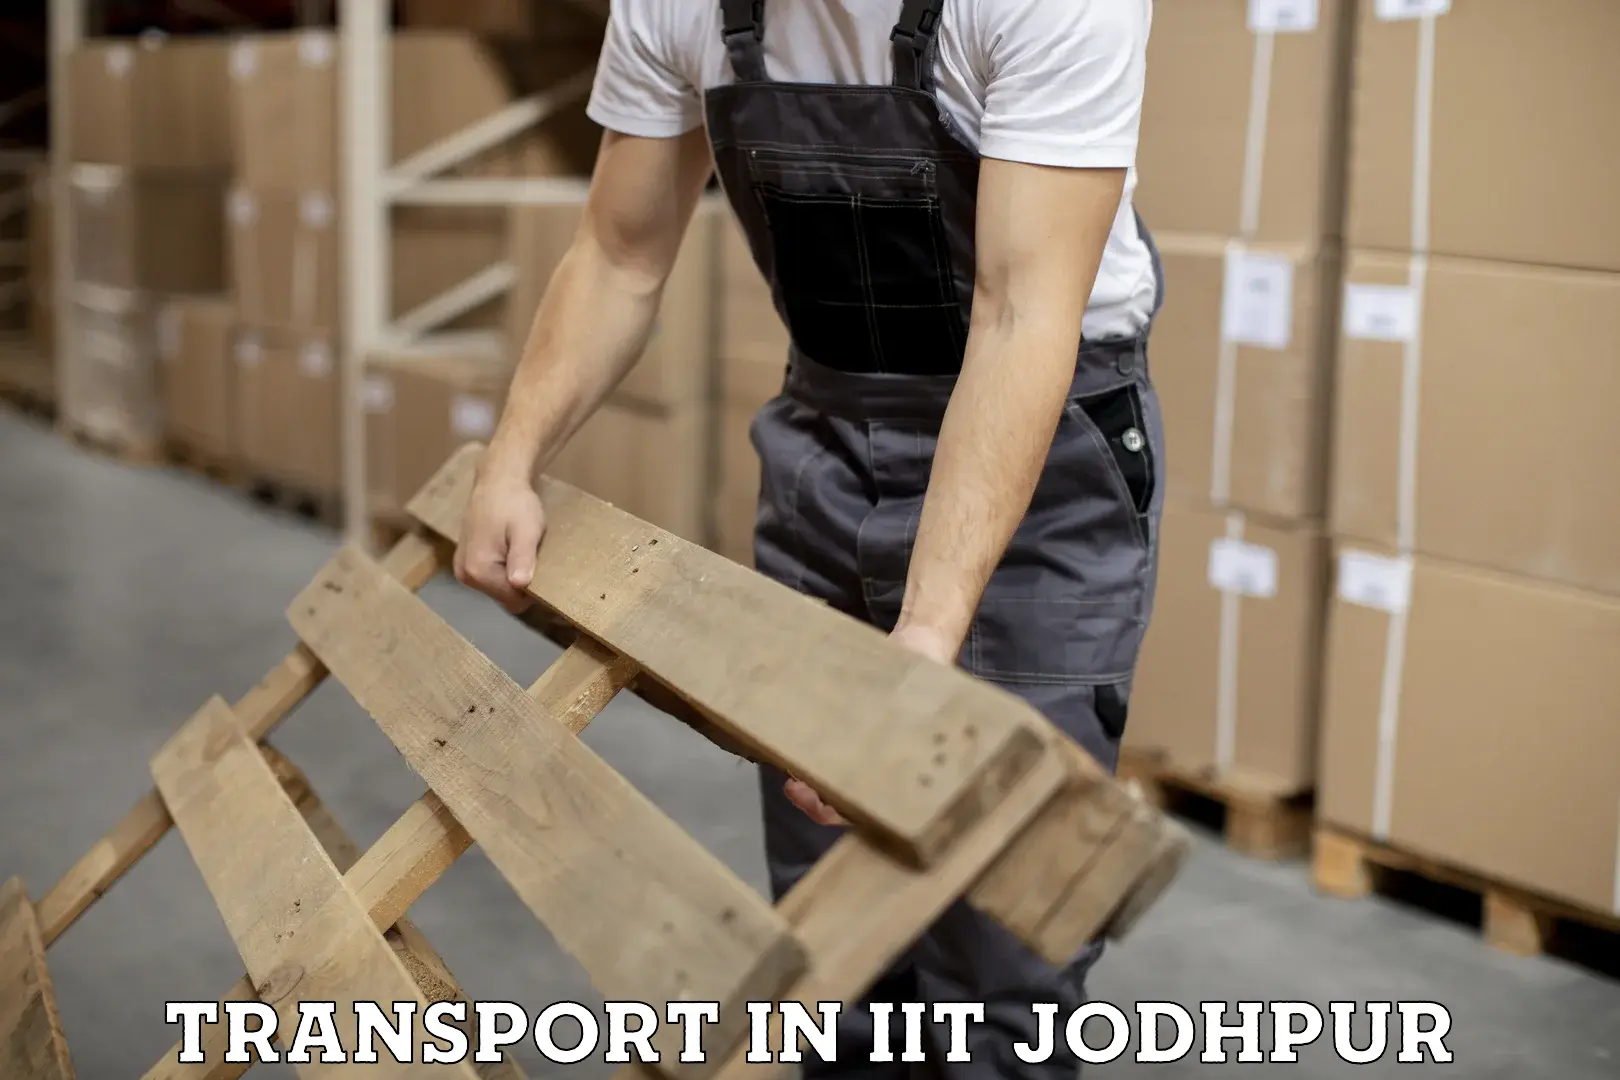 Transport shared services in IIT Jodhpur